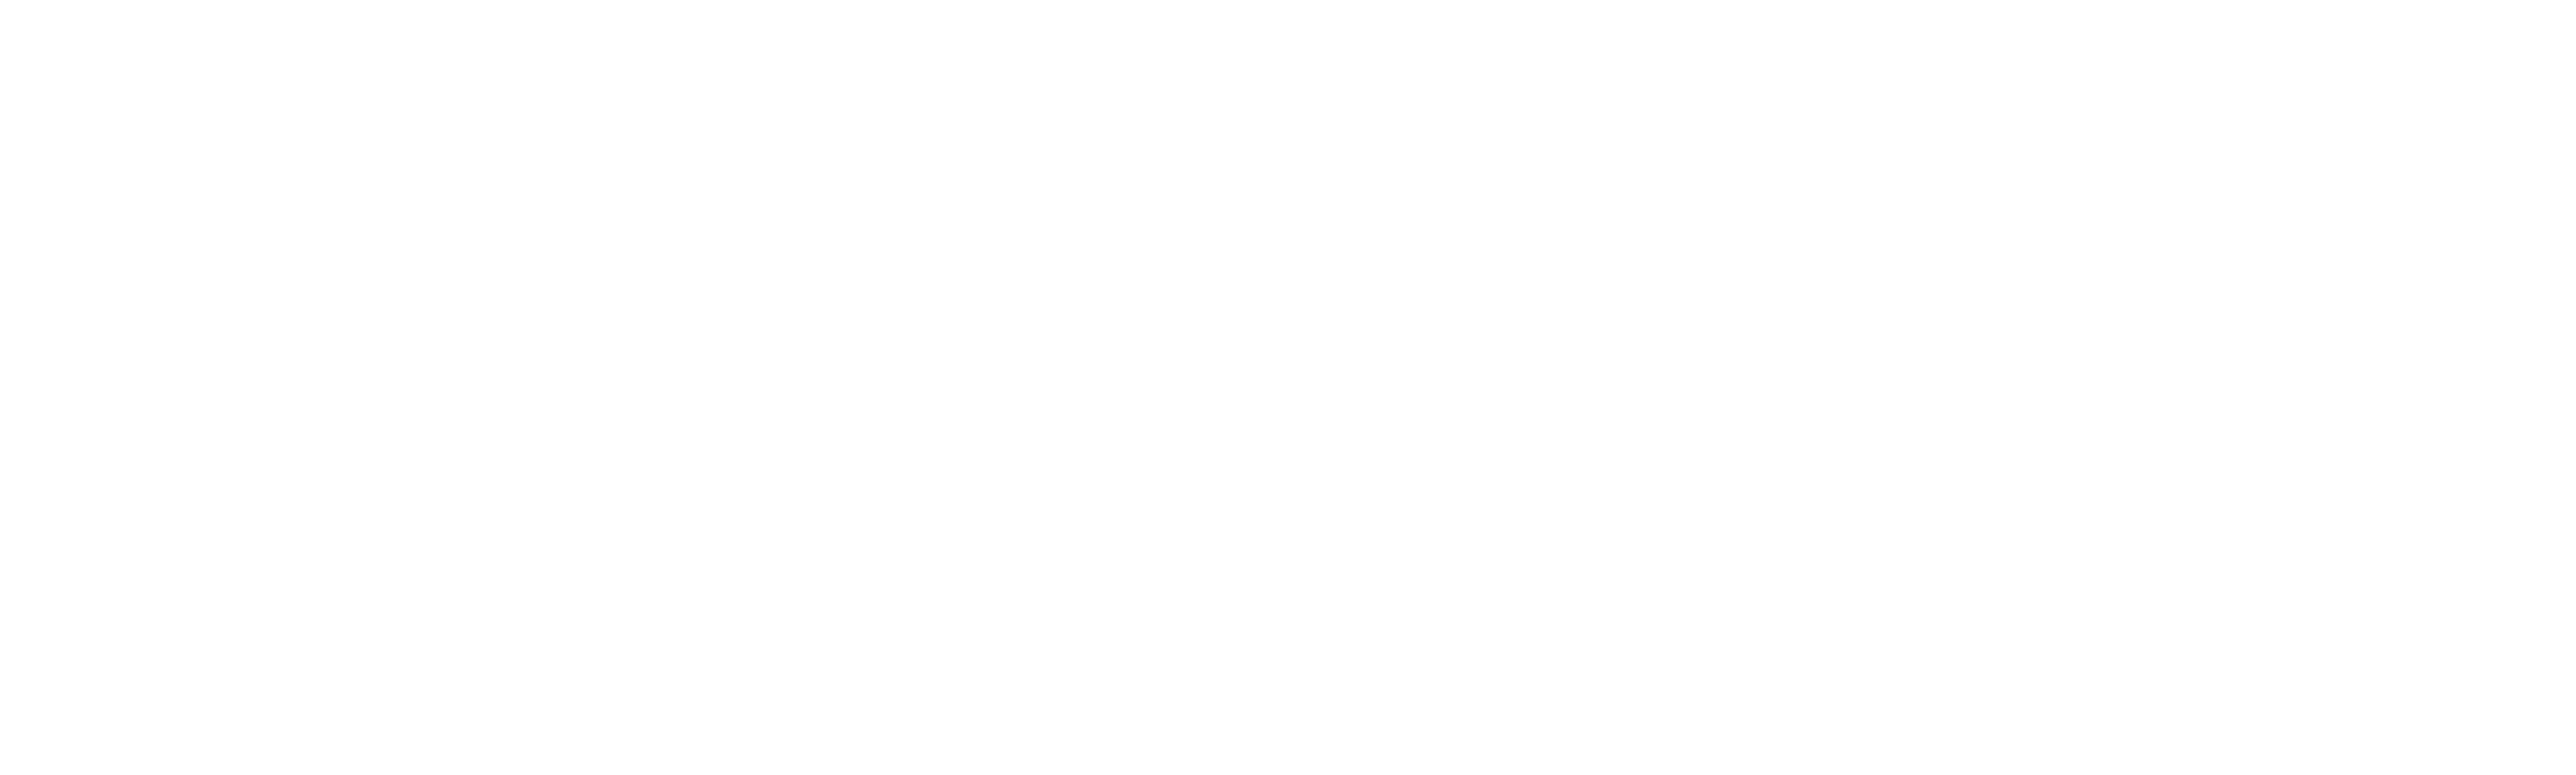 Fairy Tail entra no catálogo da HBO Max